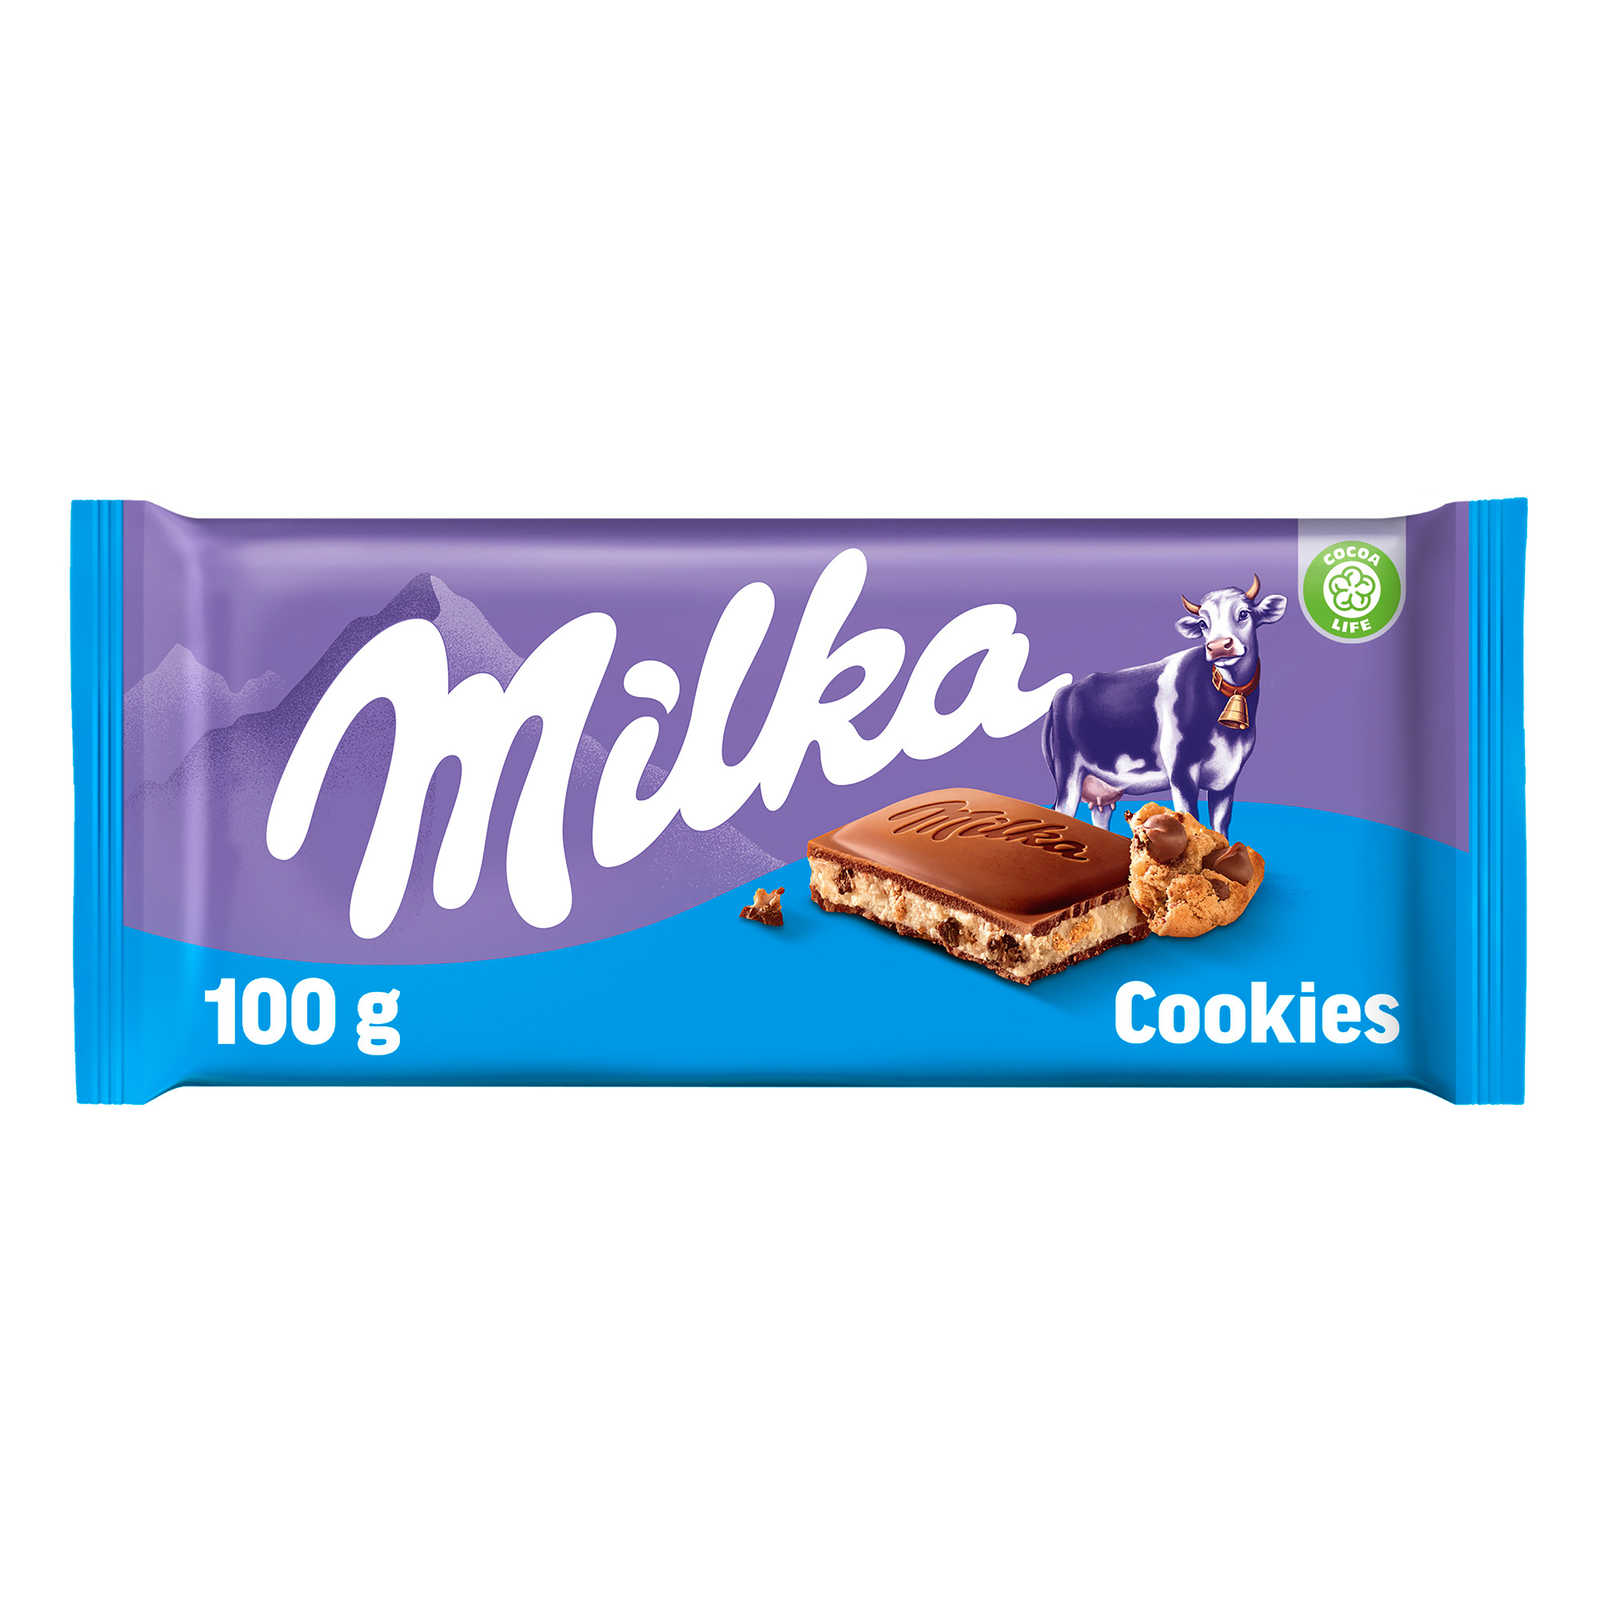 Milka Chocolate Candy & Bars